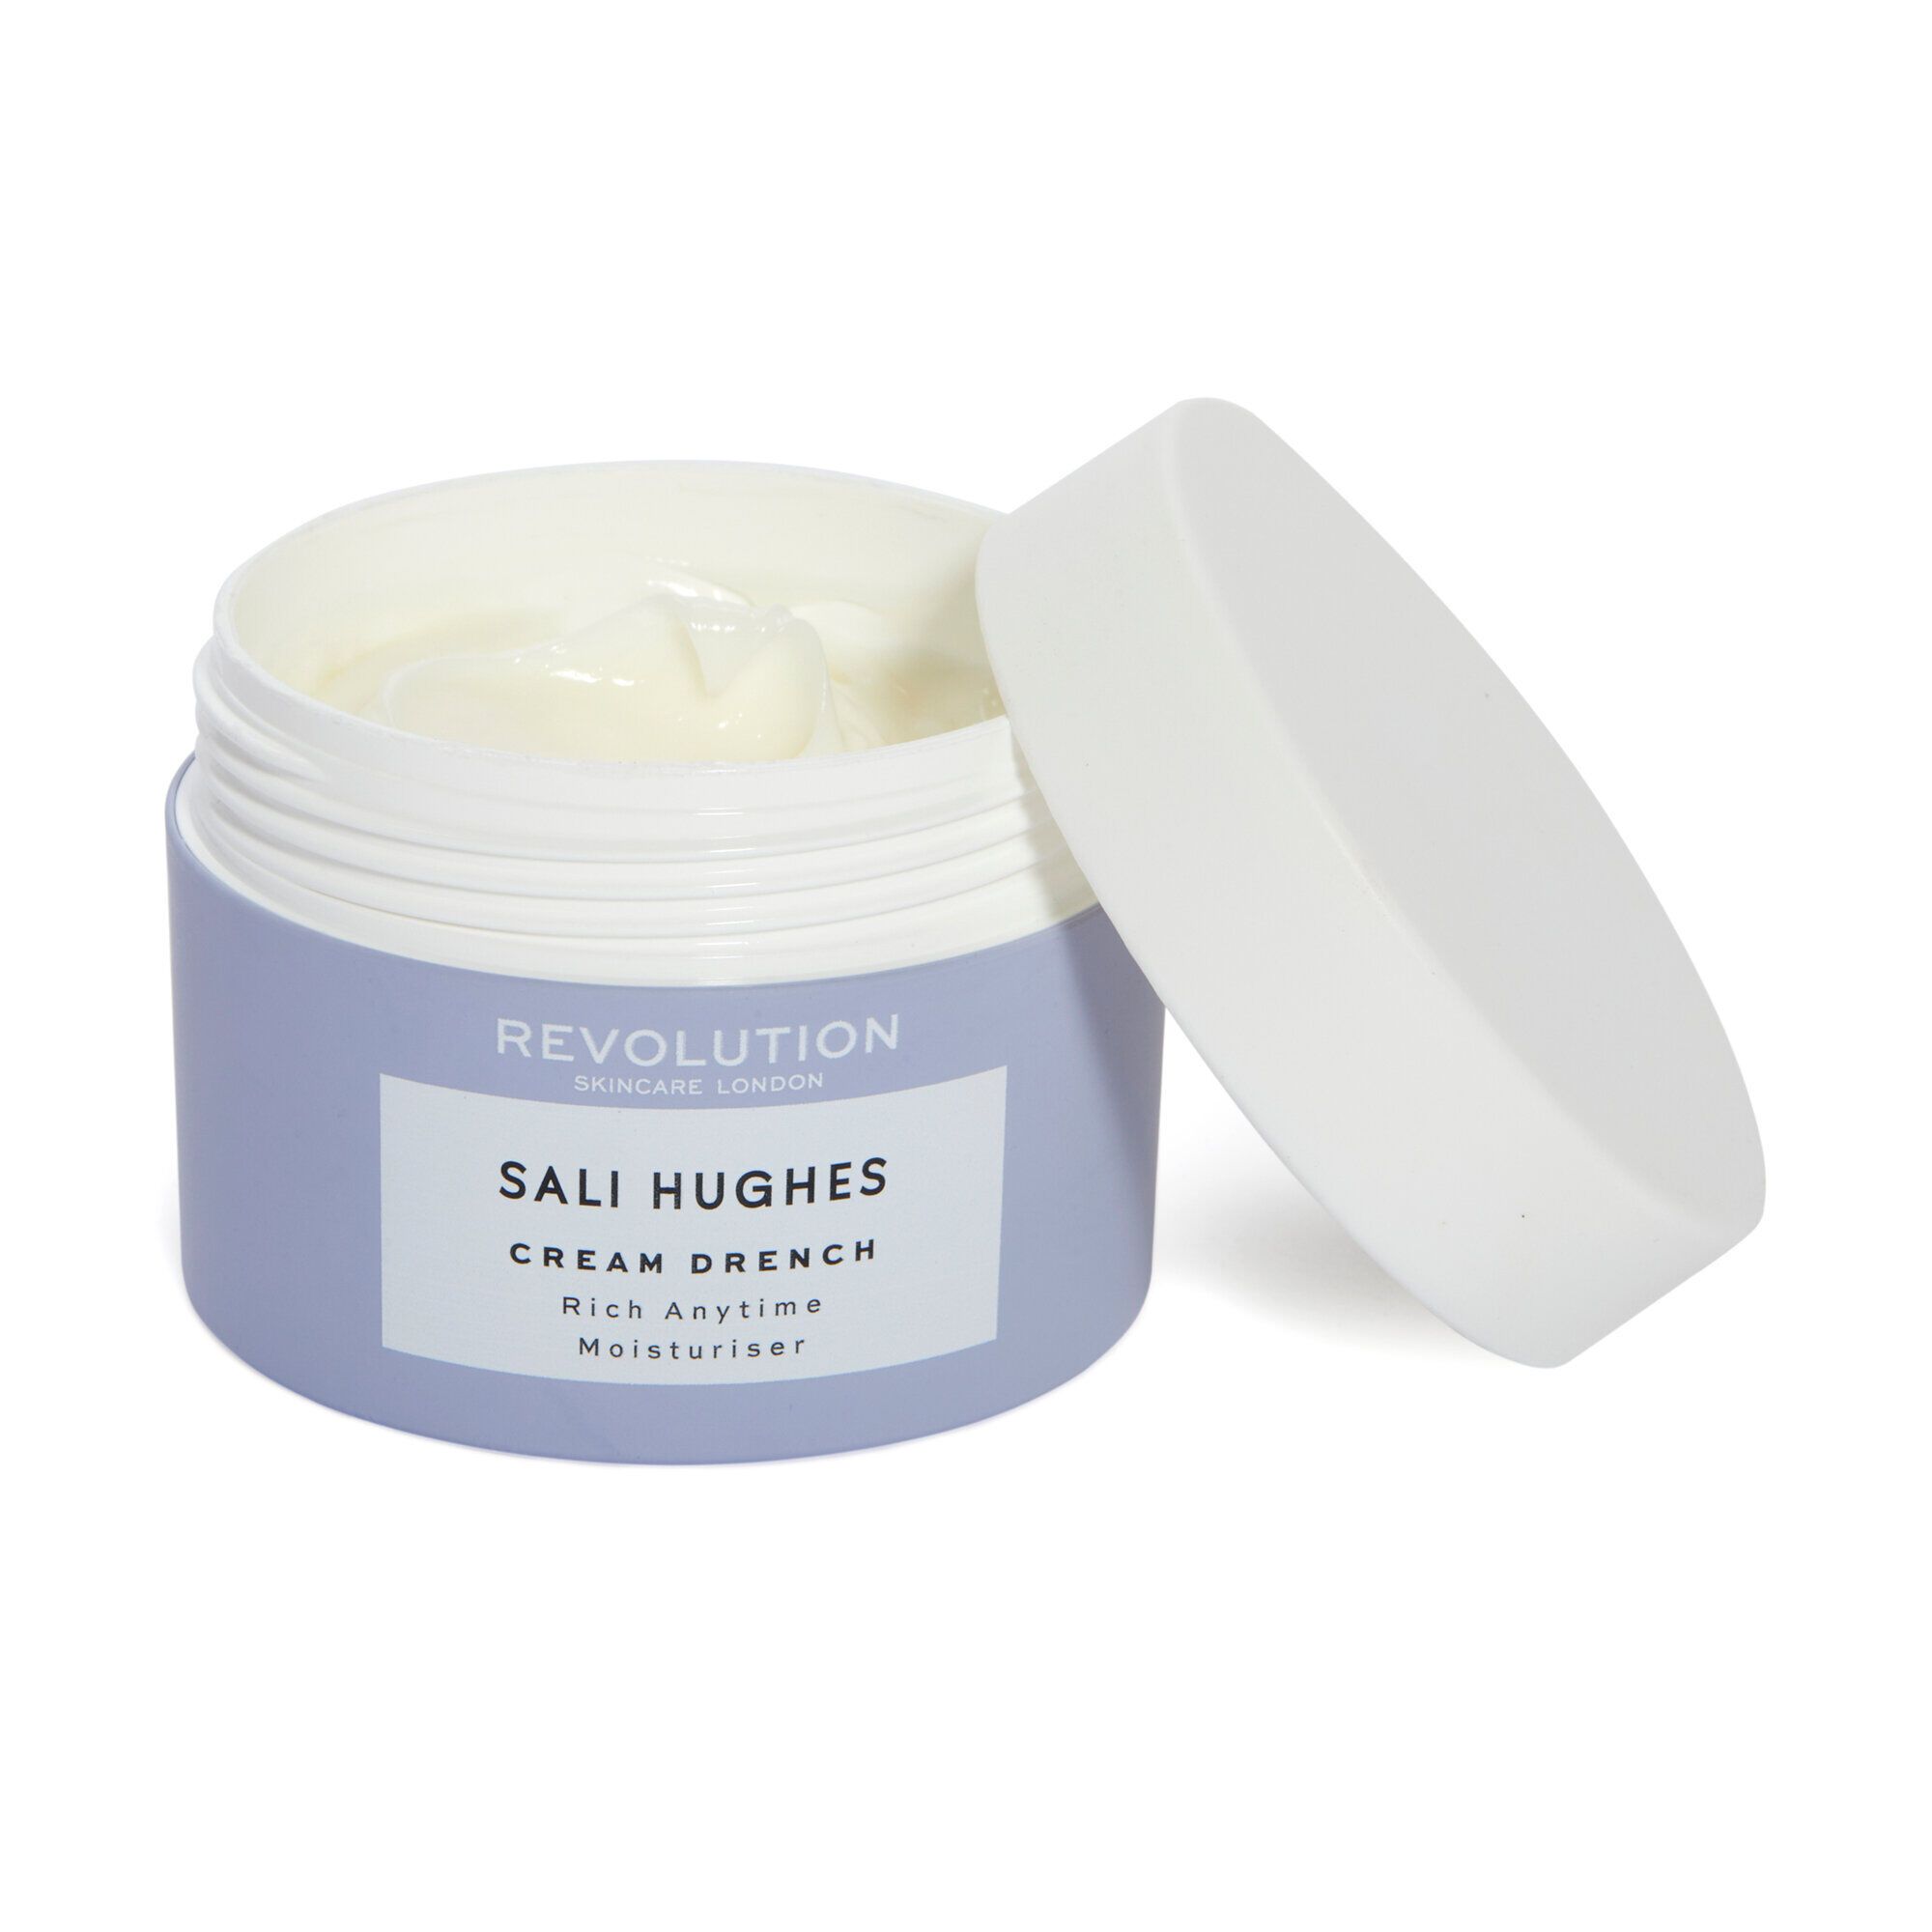 Revolution Skincare x Sali Hughes - Cream Drench Rich Anytime Moisturiser